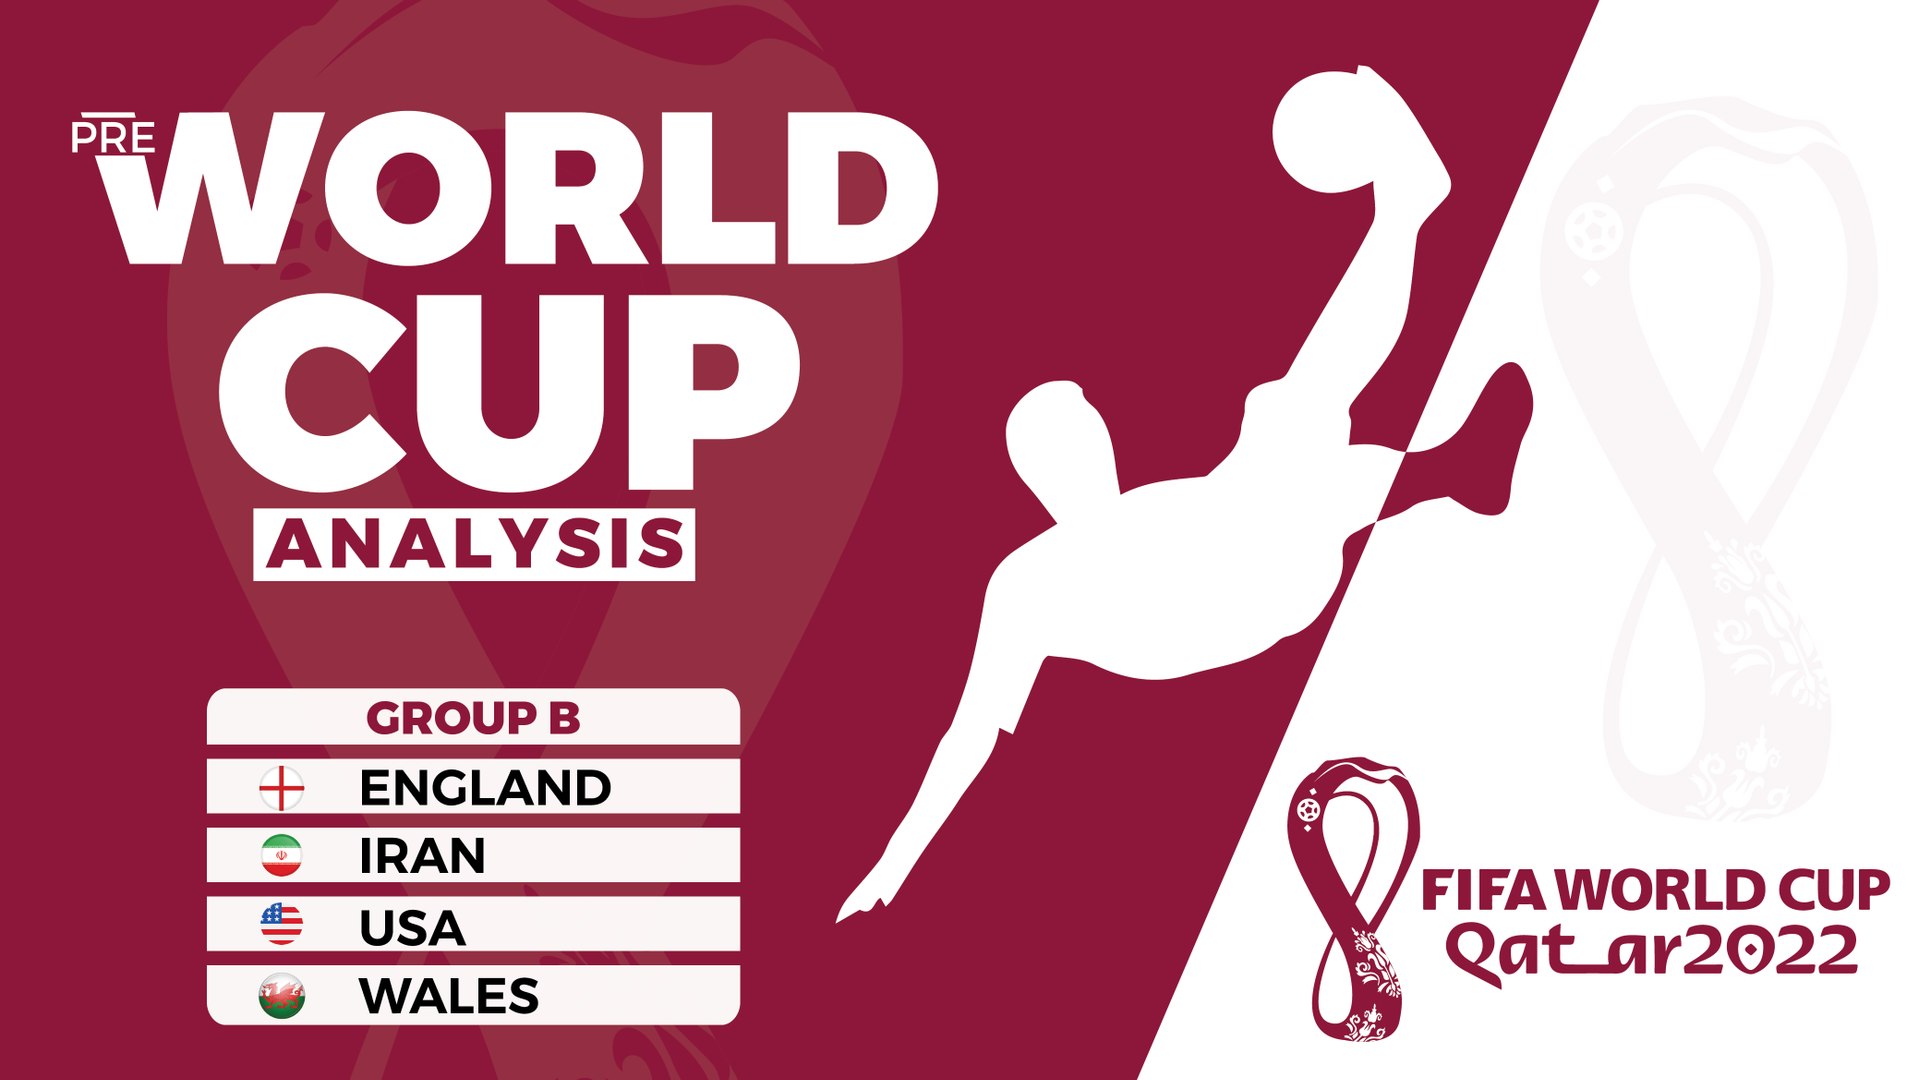 Fifa World Cup Qatar 2022 preview: Group B